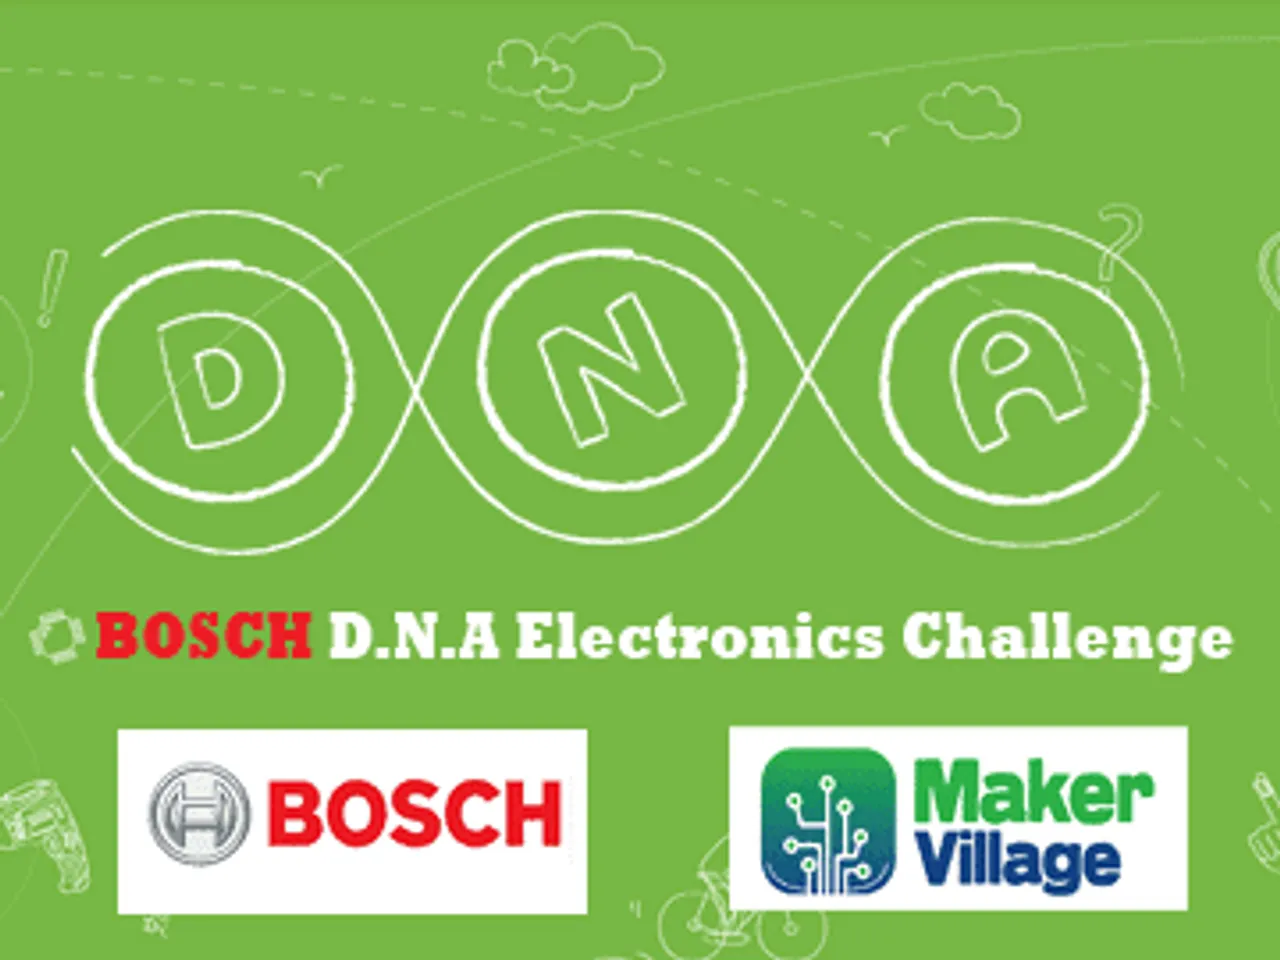 13 Indian startups graduate from Bosch’s DNA accelerator program